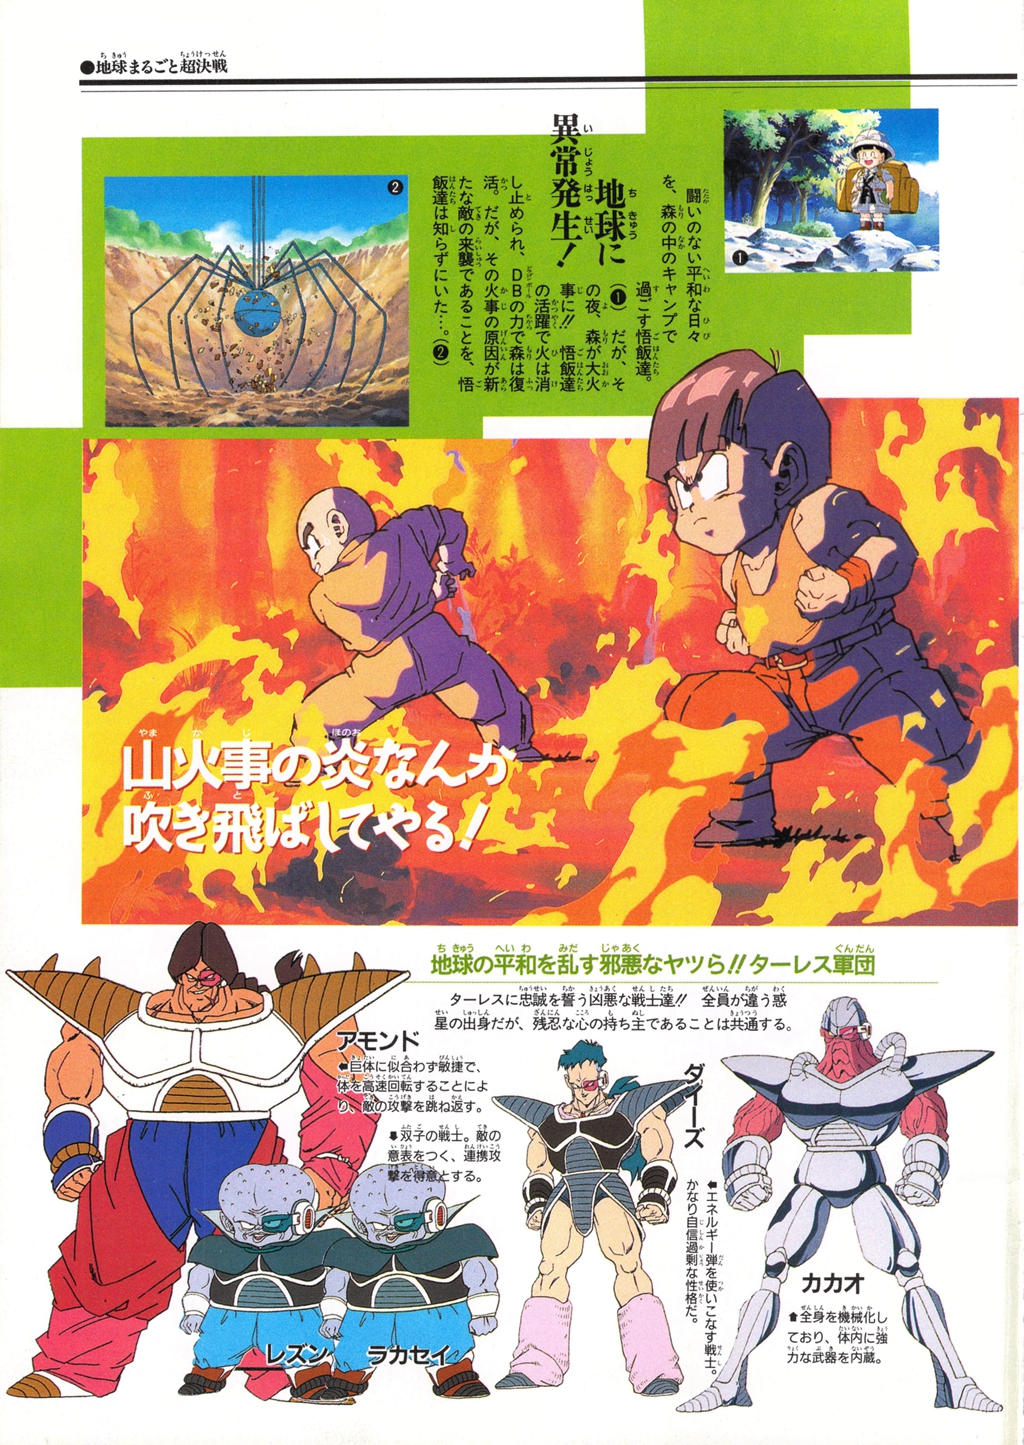 Dragon Ball Animation Guide Part 2 ドラゴンボール超全集 3 愛蔵版コミックス 鳥山明 Toriyama Akira Free Download Borrow And Streaming Internet Archive